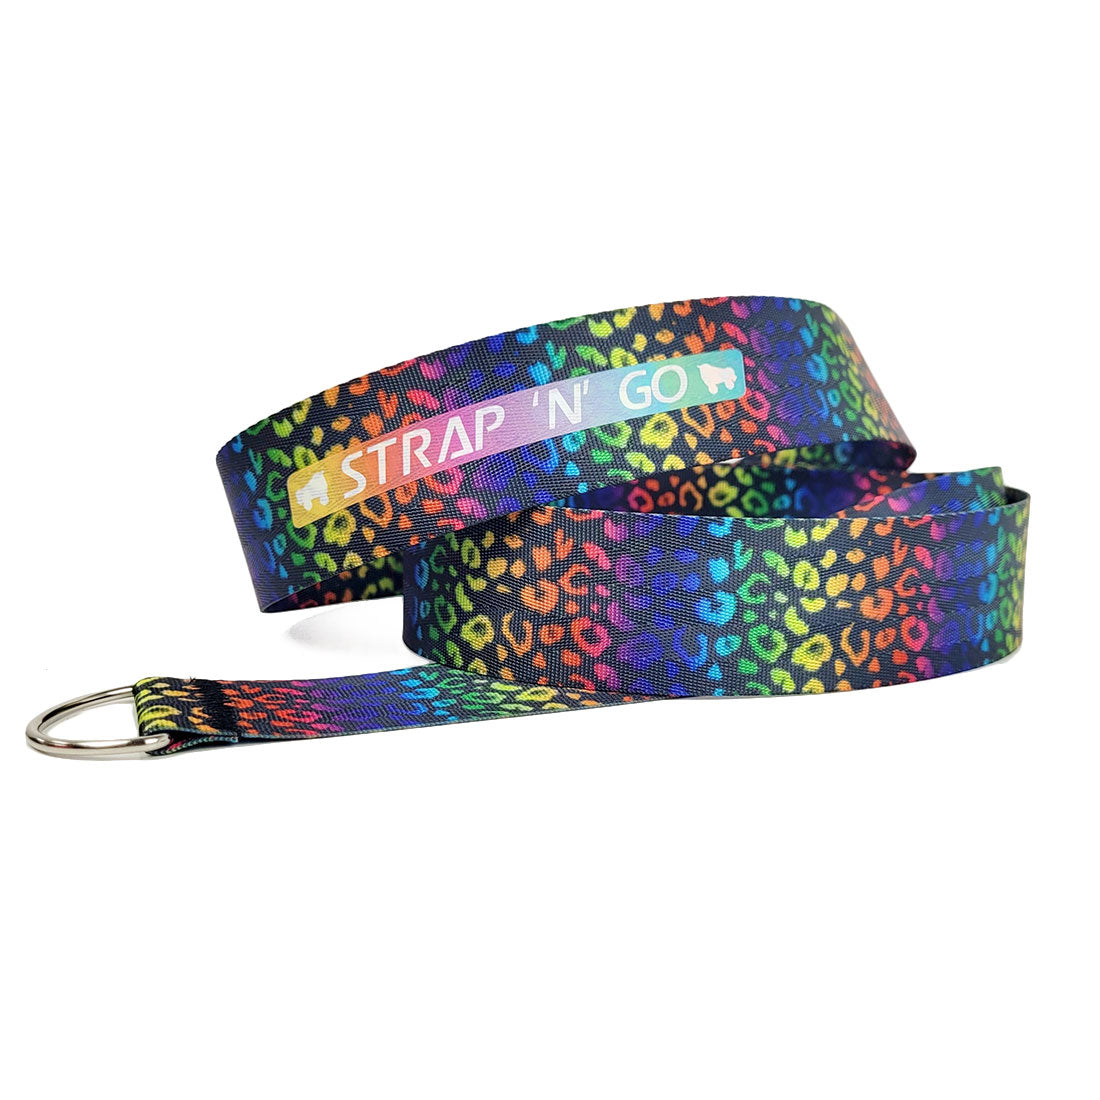 Strap N Go Skate Noose/Leash - Patterns Rainbow Leopard Roller Skate Accessories